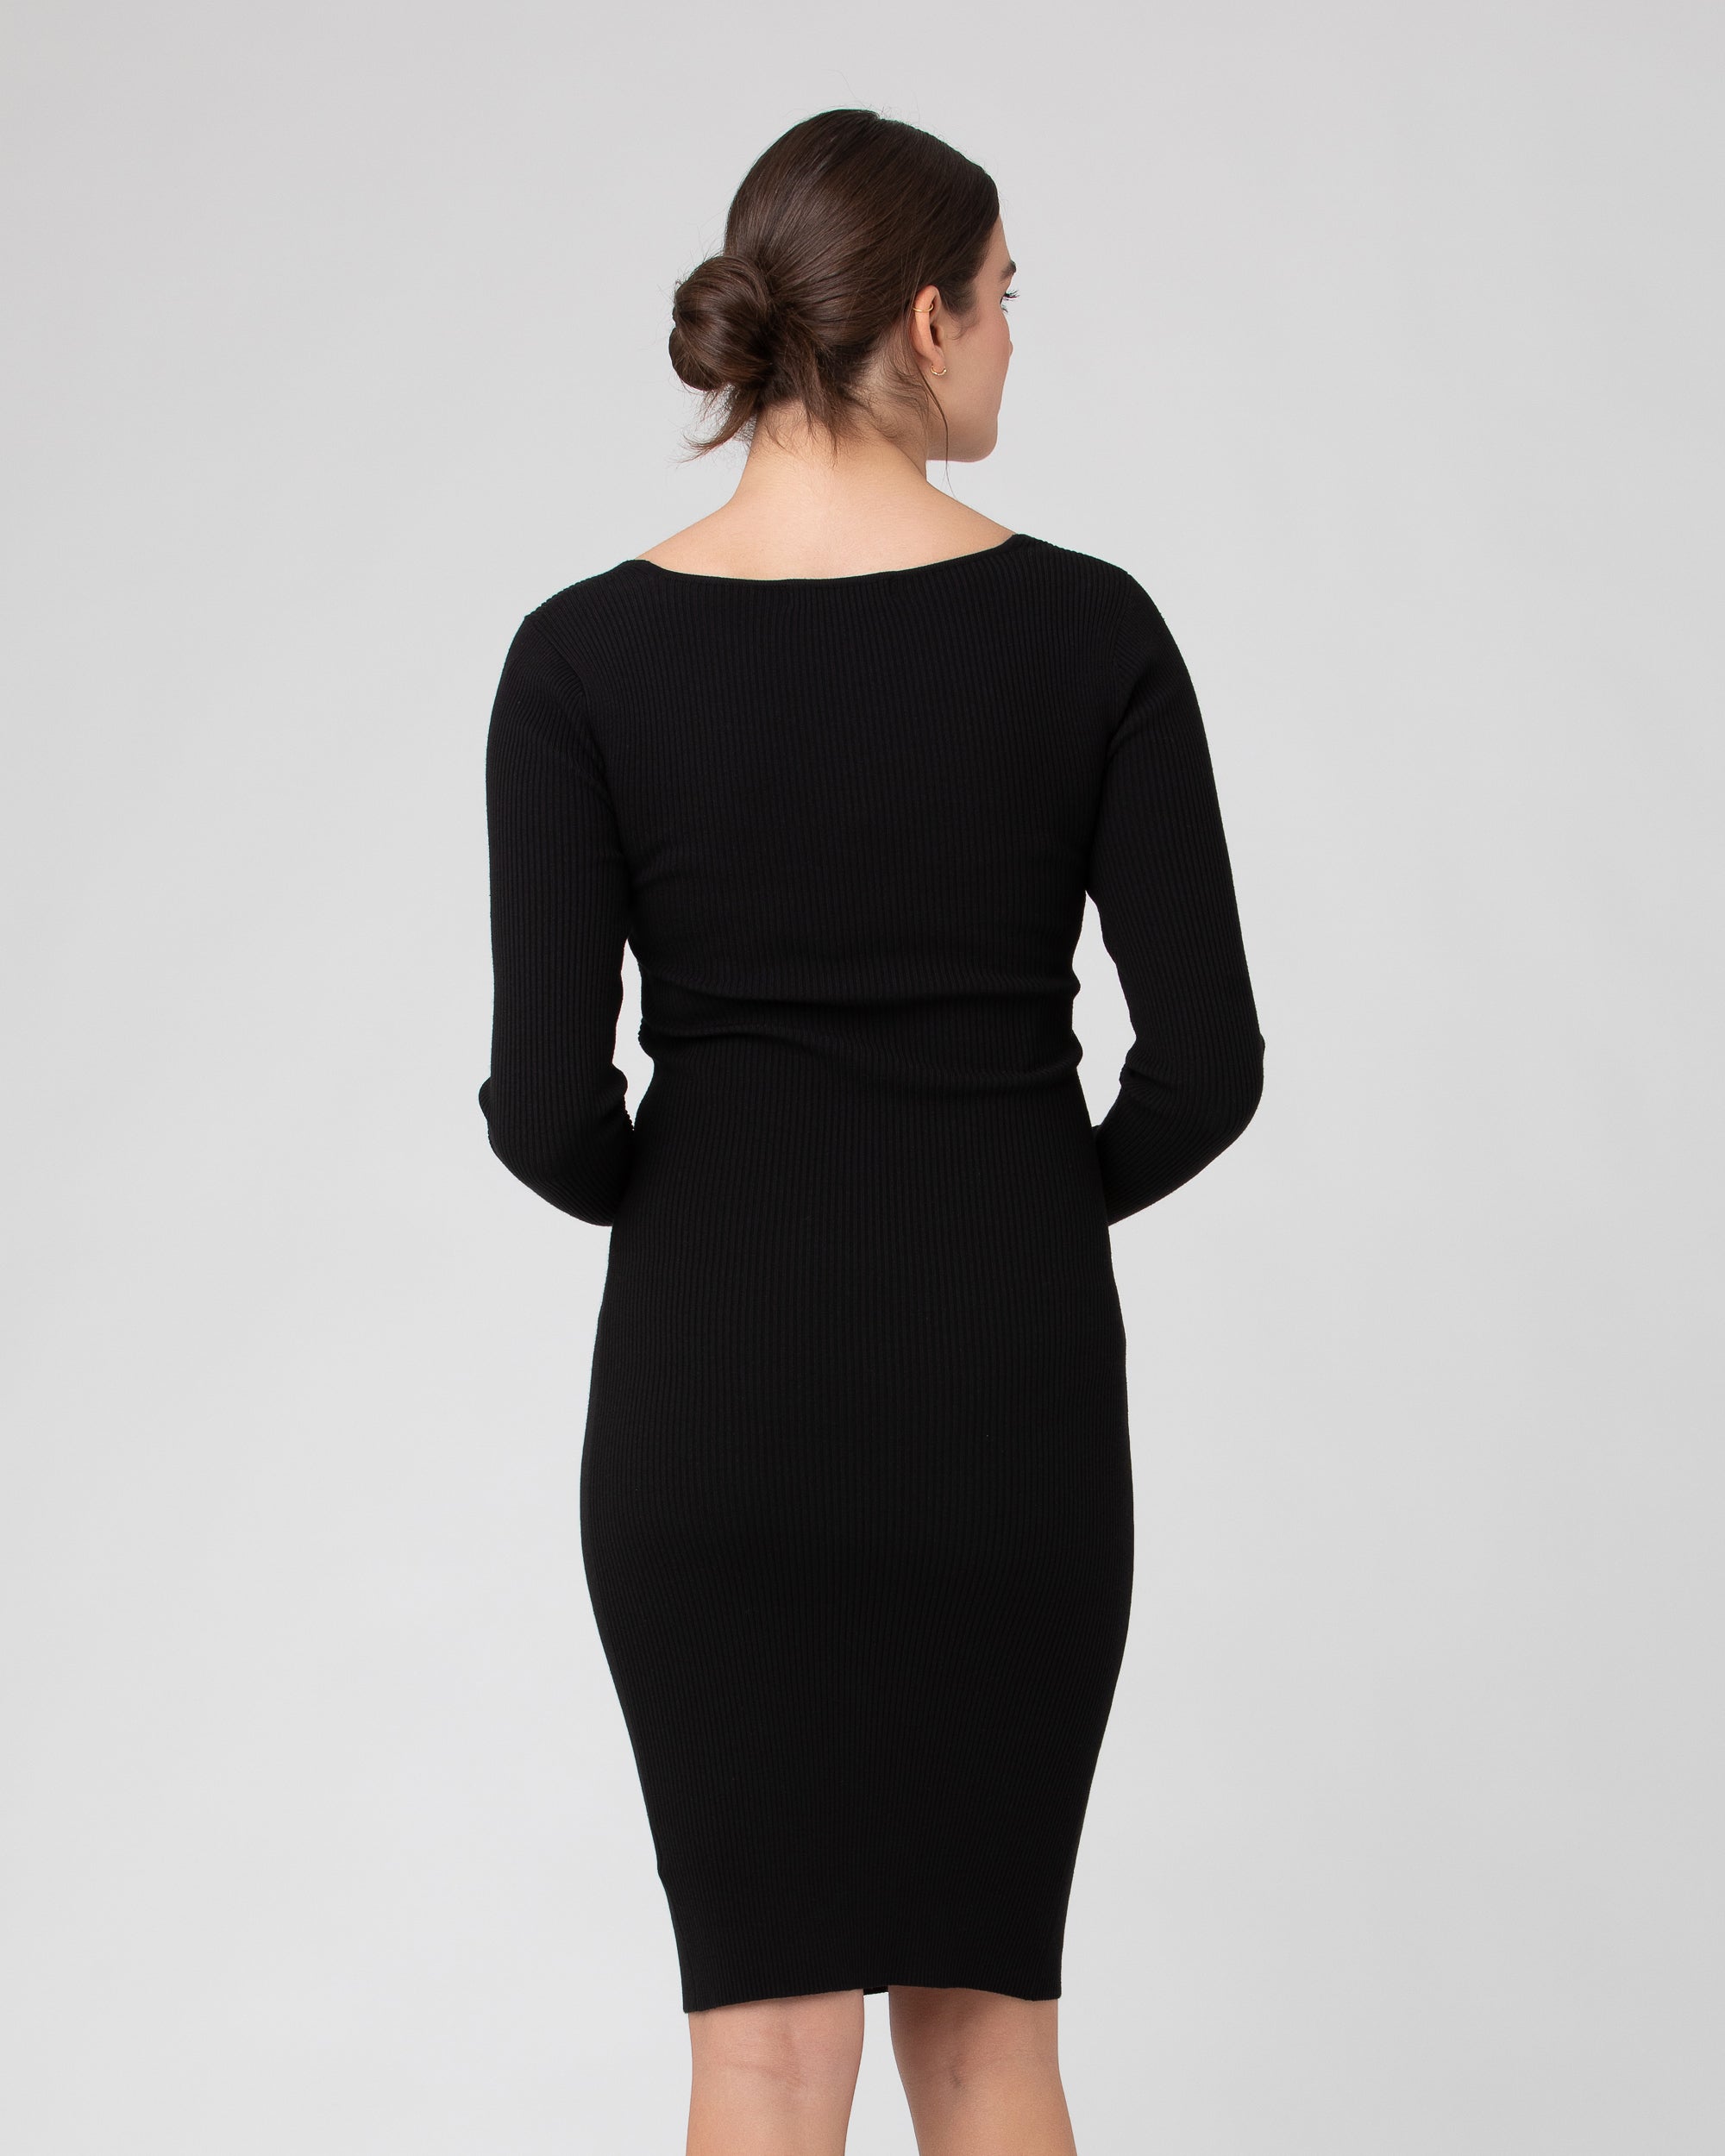 Ripe Maternity Size Large Long Sleeve Sweater Maxi Dress Black Cotton Blend